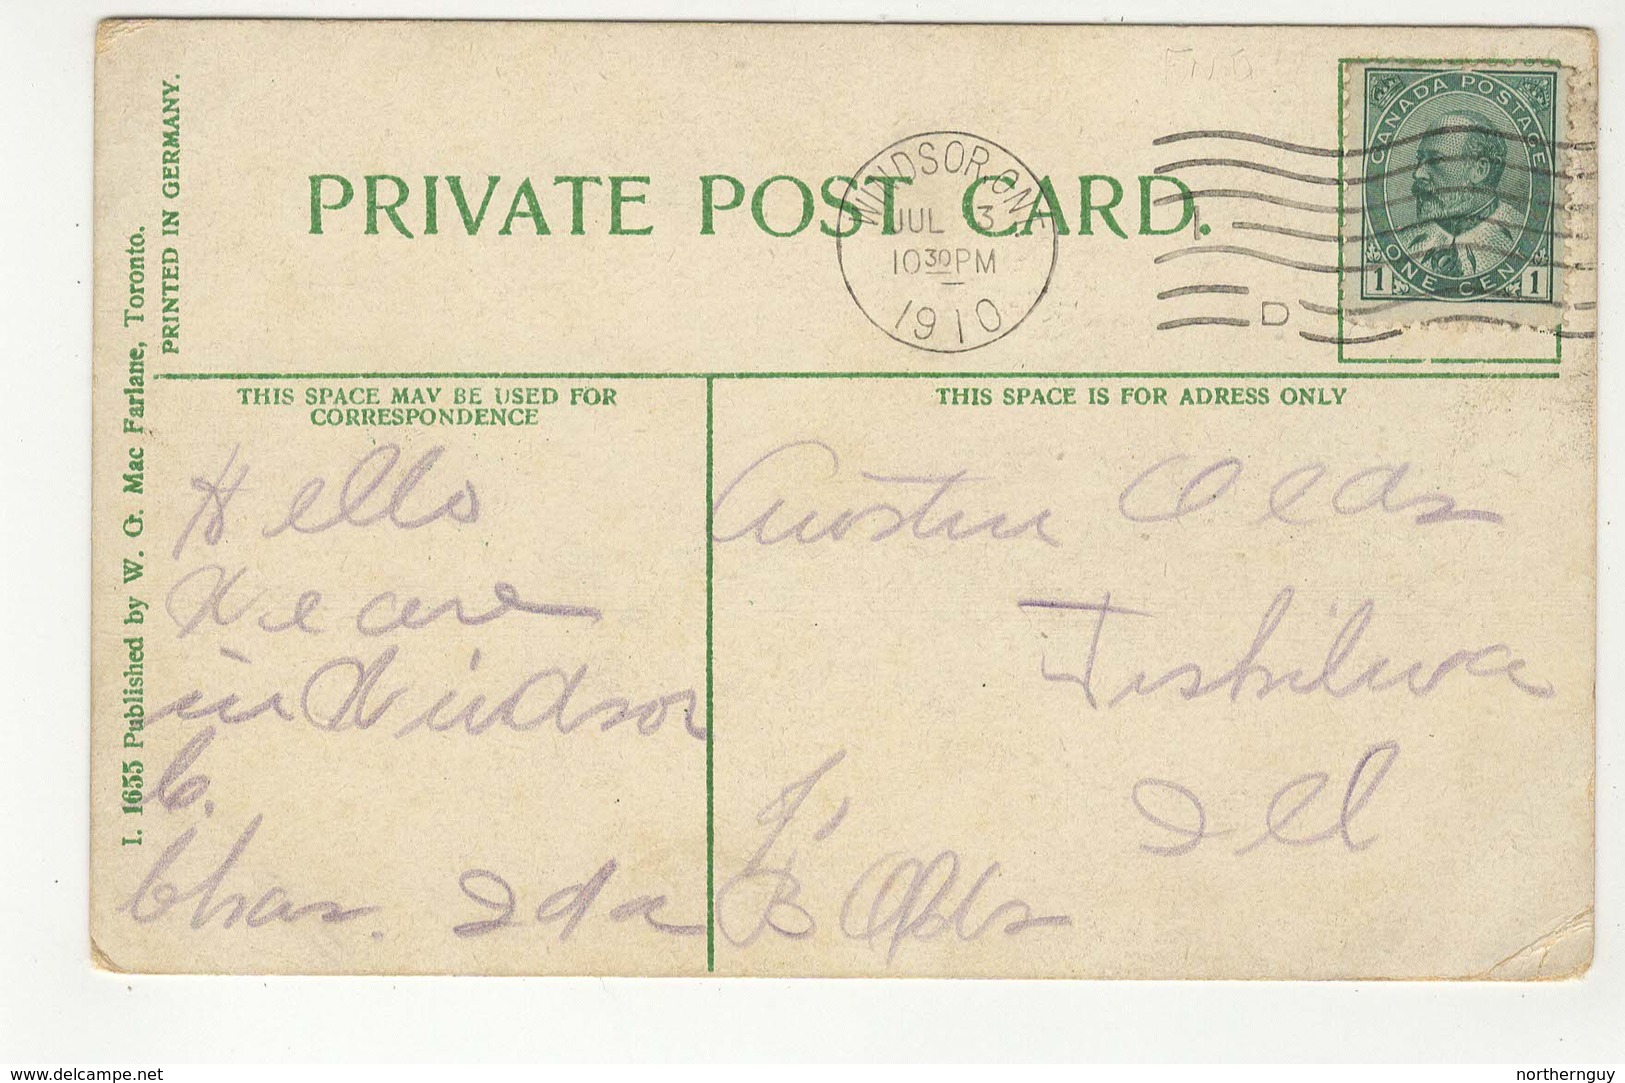 WINDSOR, Ontario, Canada, City Hall, 1910 Macfarlane Heraldic Postcard, Essex County - Windsor